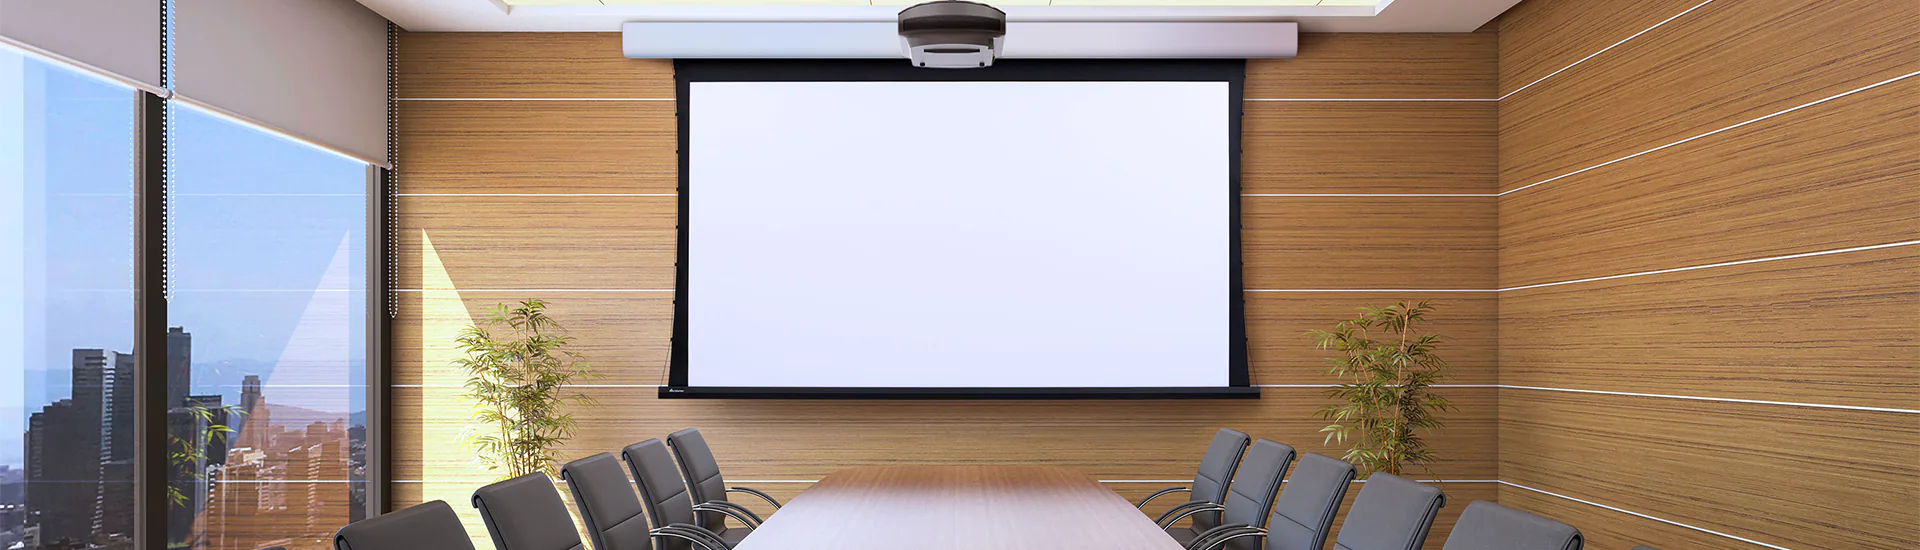 Acumen V screen in a corporate boardroom